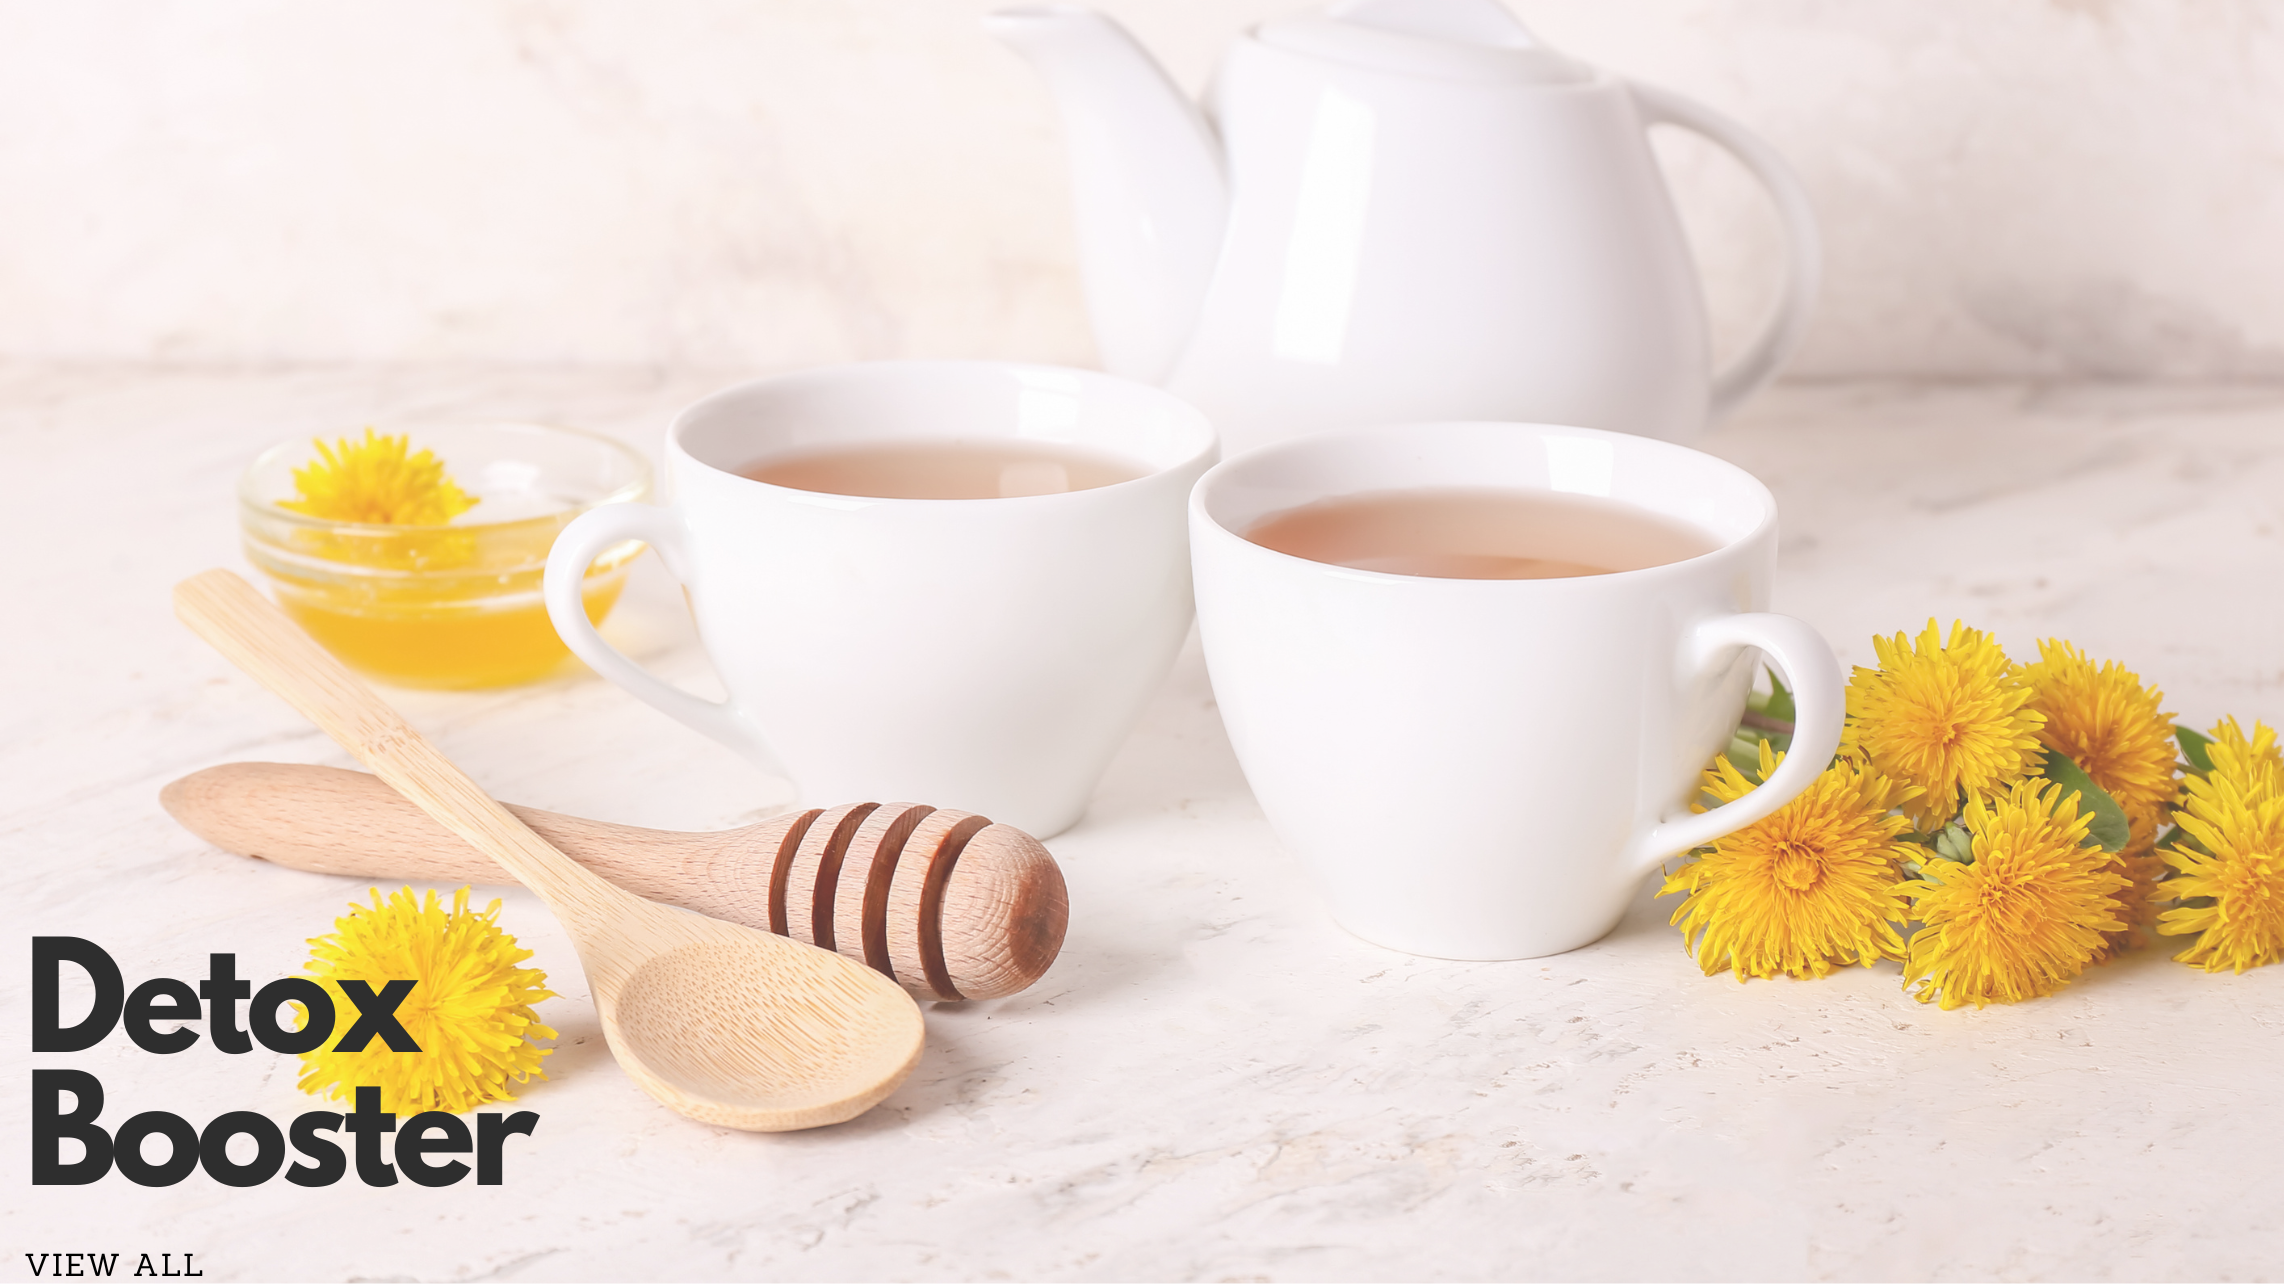 Detox Booster Ayurvedic Tea recommendations